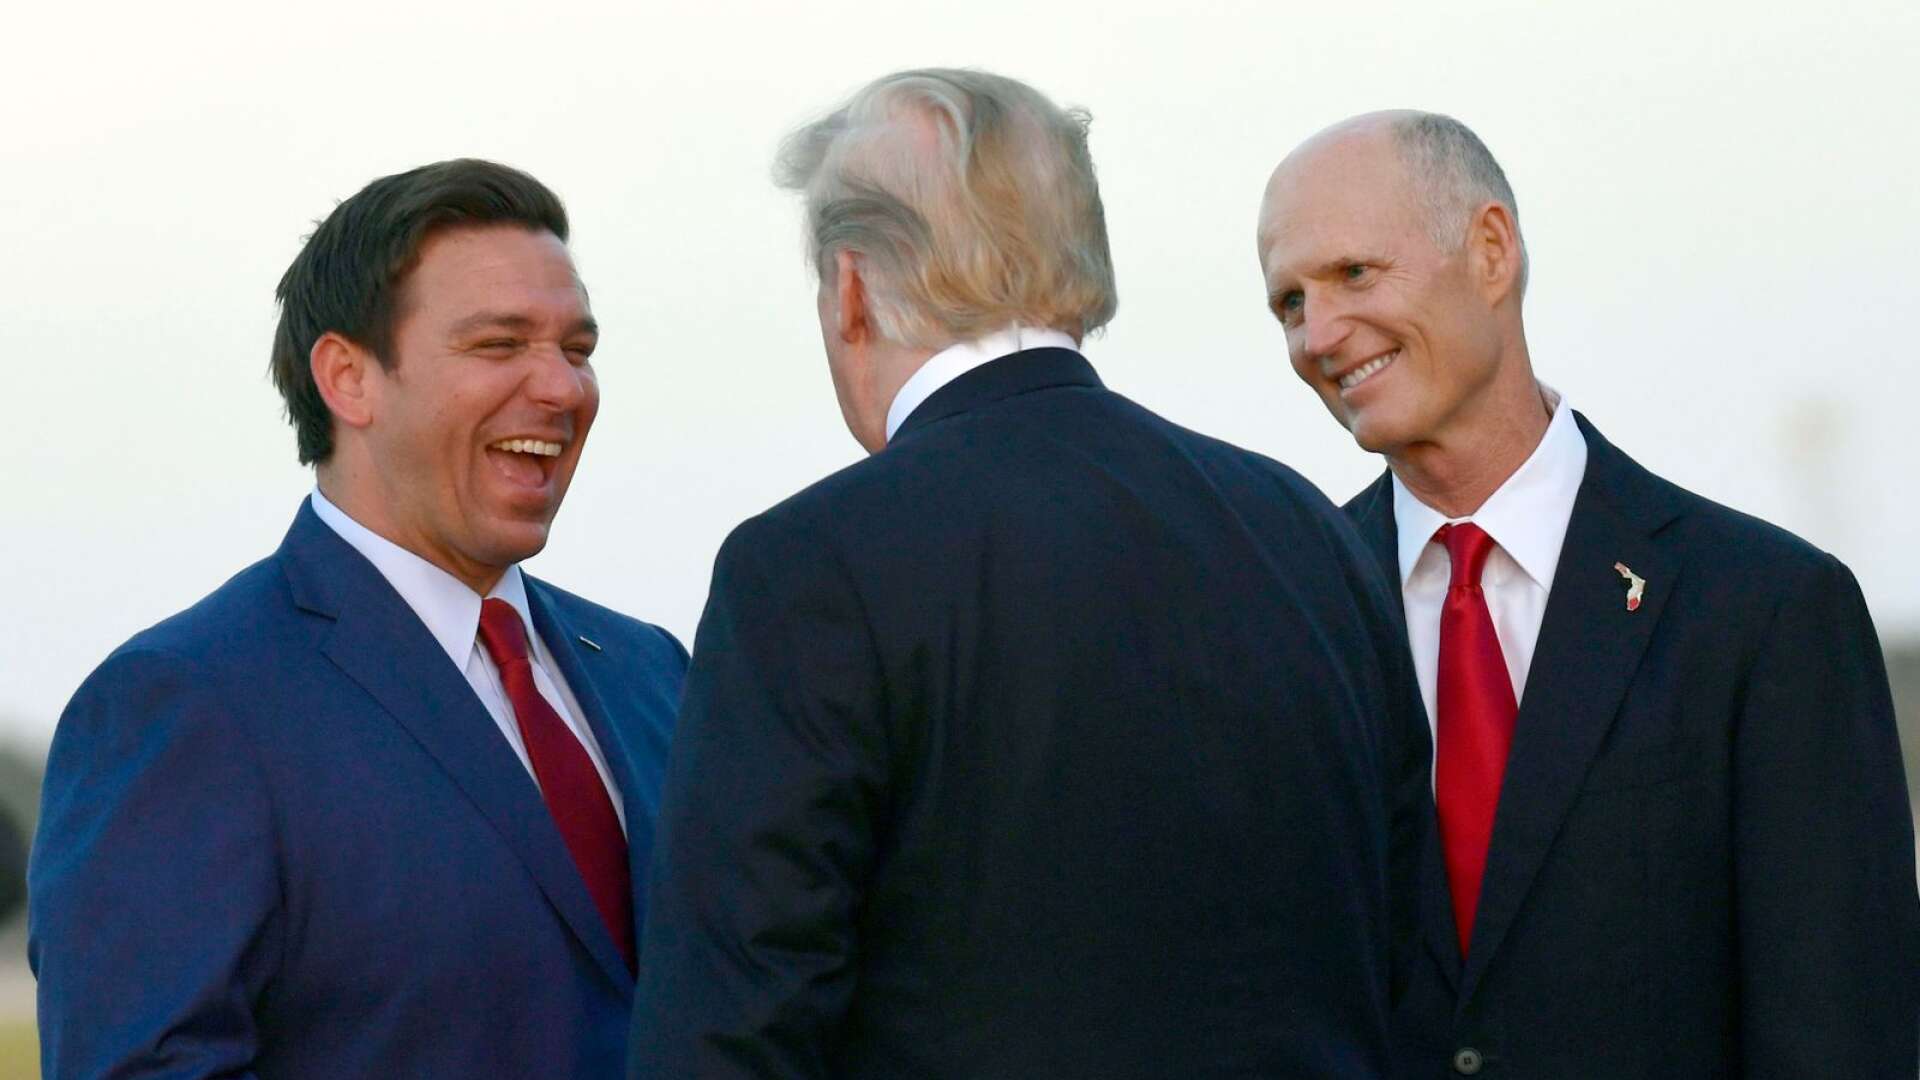 Nye Floridaguvernören Ron DeSantis och nye Floridasenatorn Rick Scott träffar president Trump.